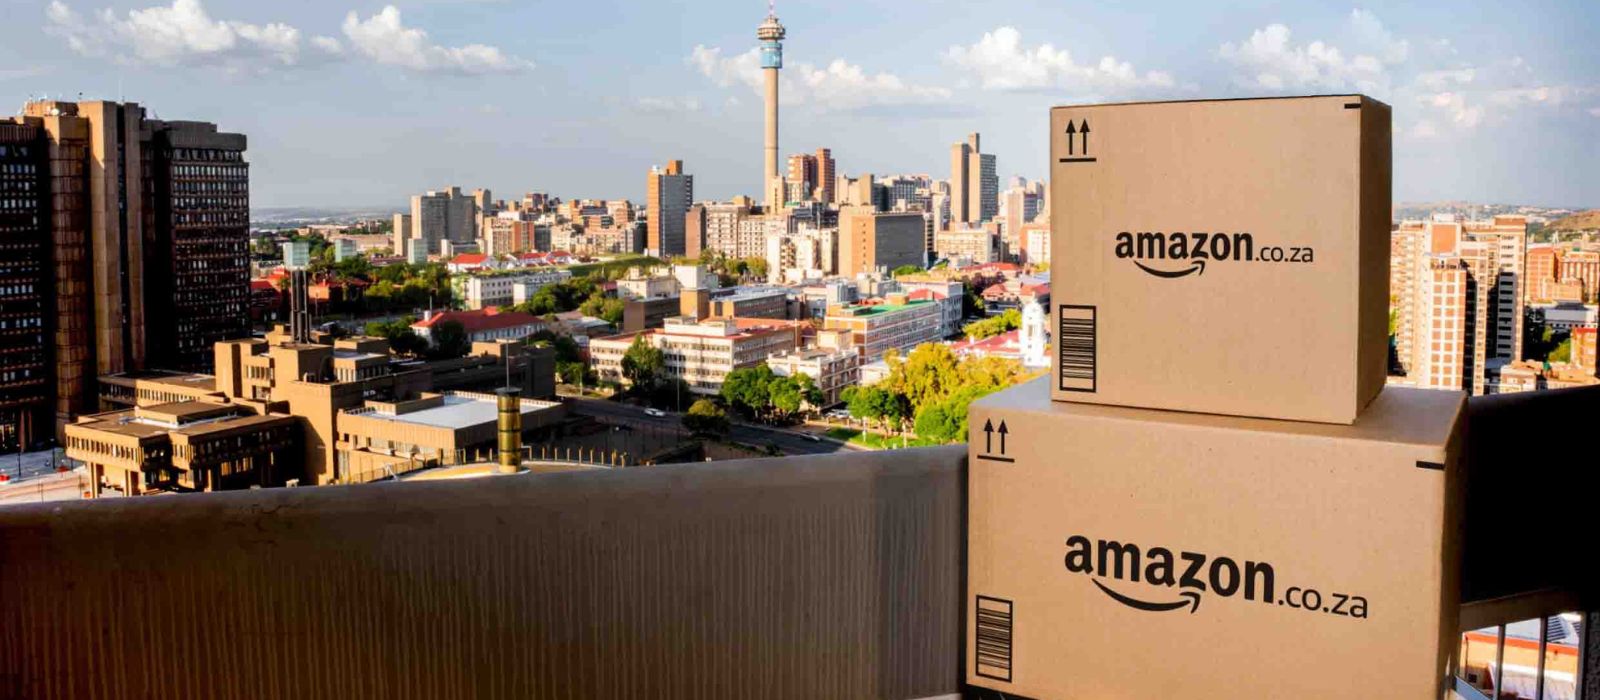 Amazon makes landmark entry into South African market